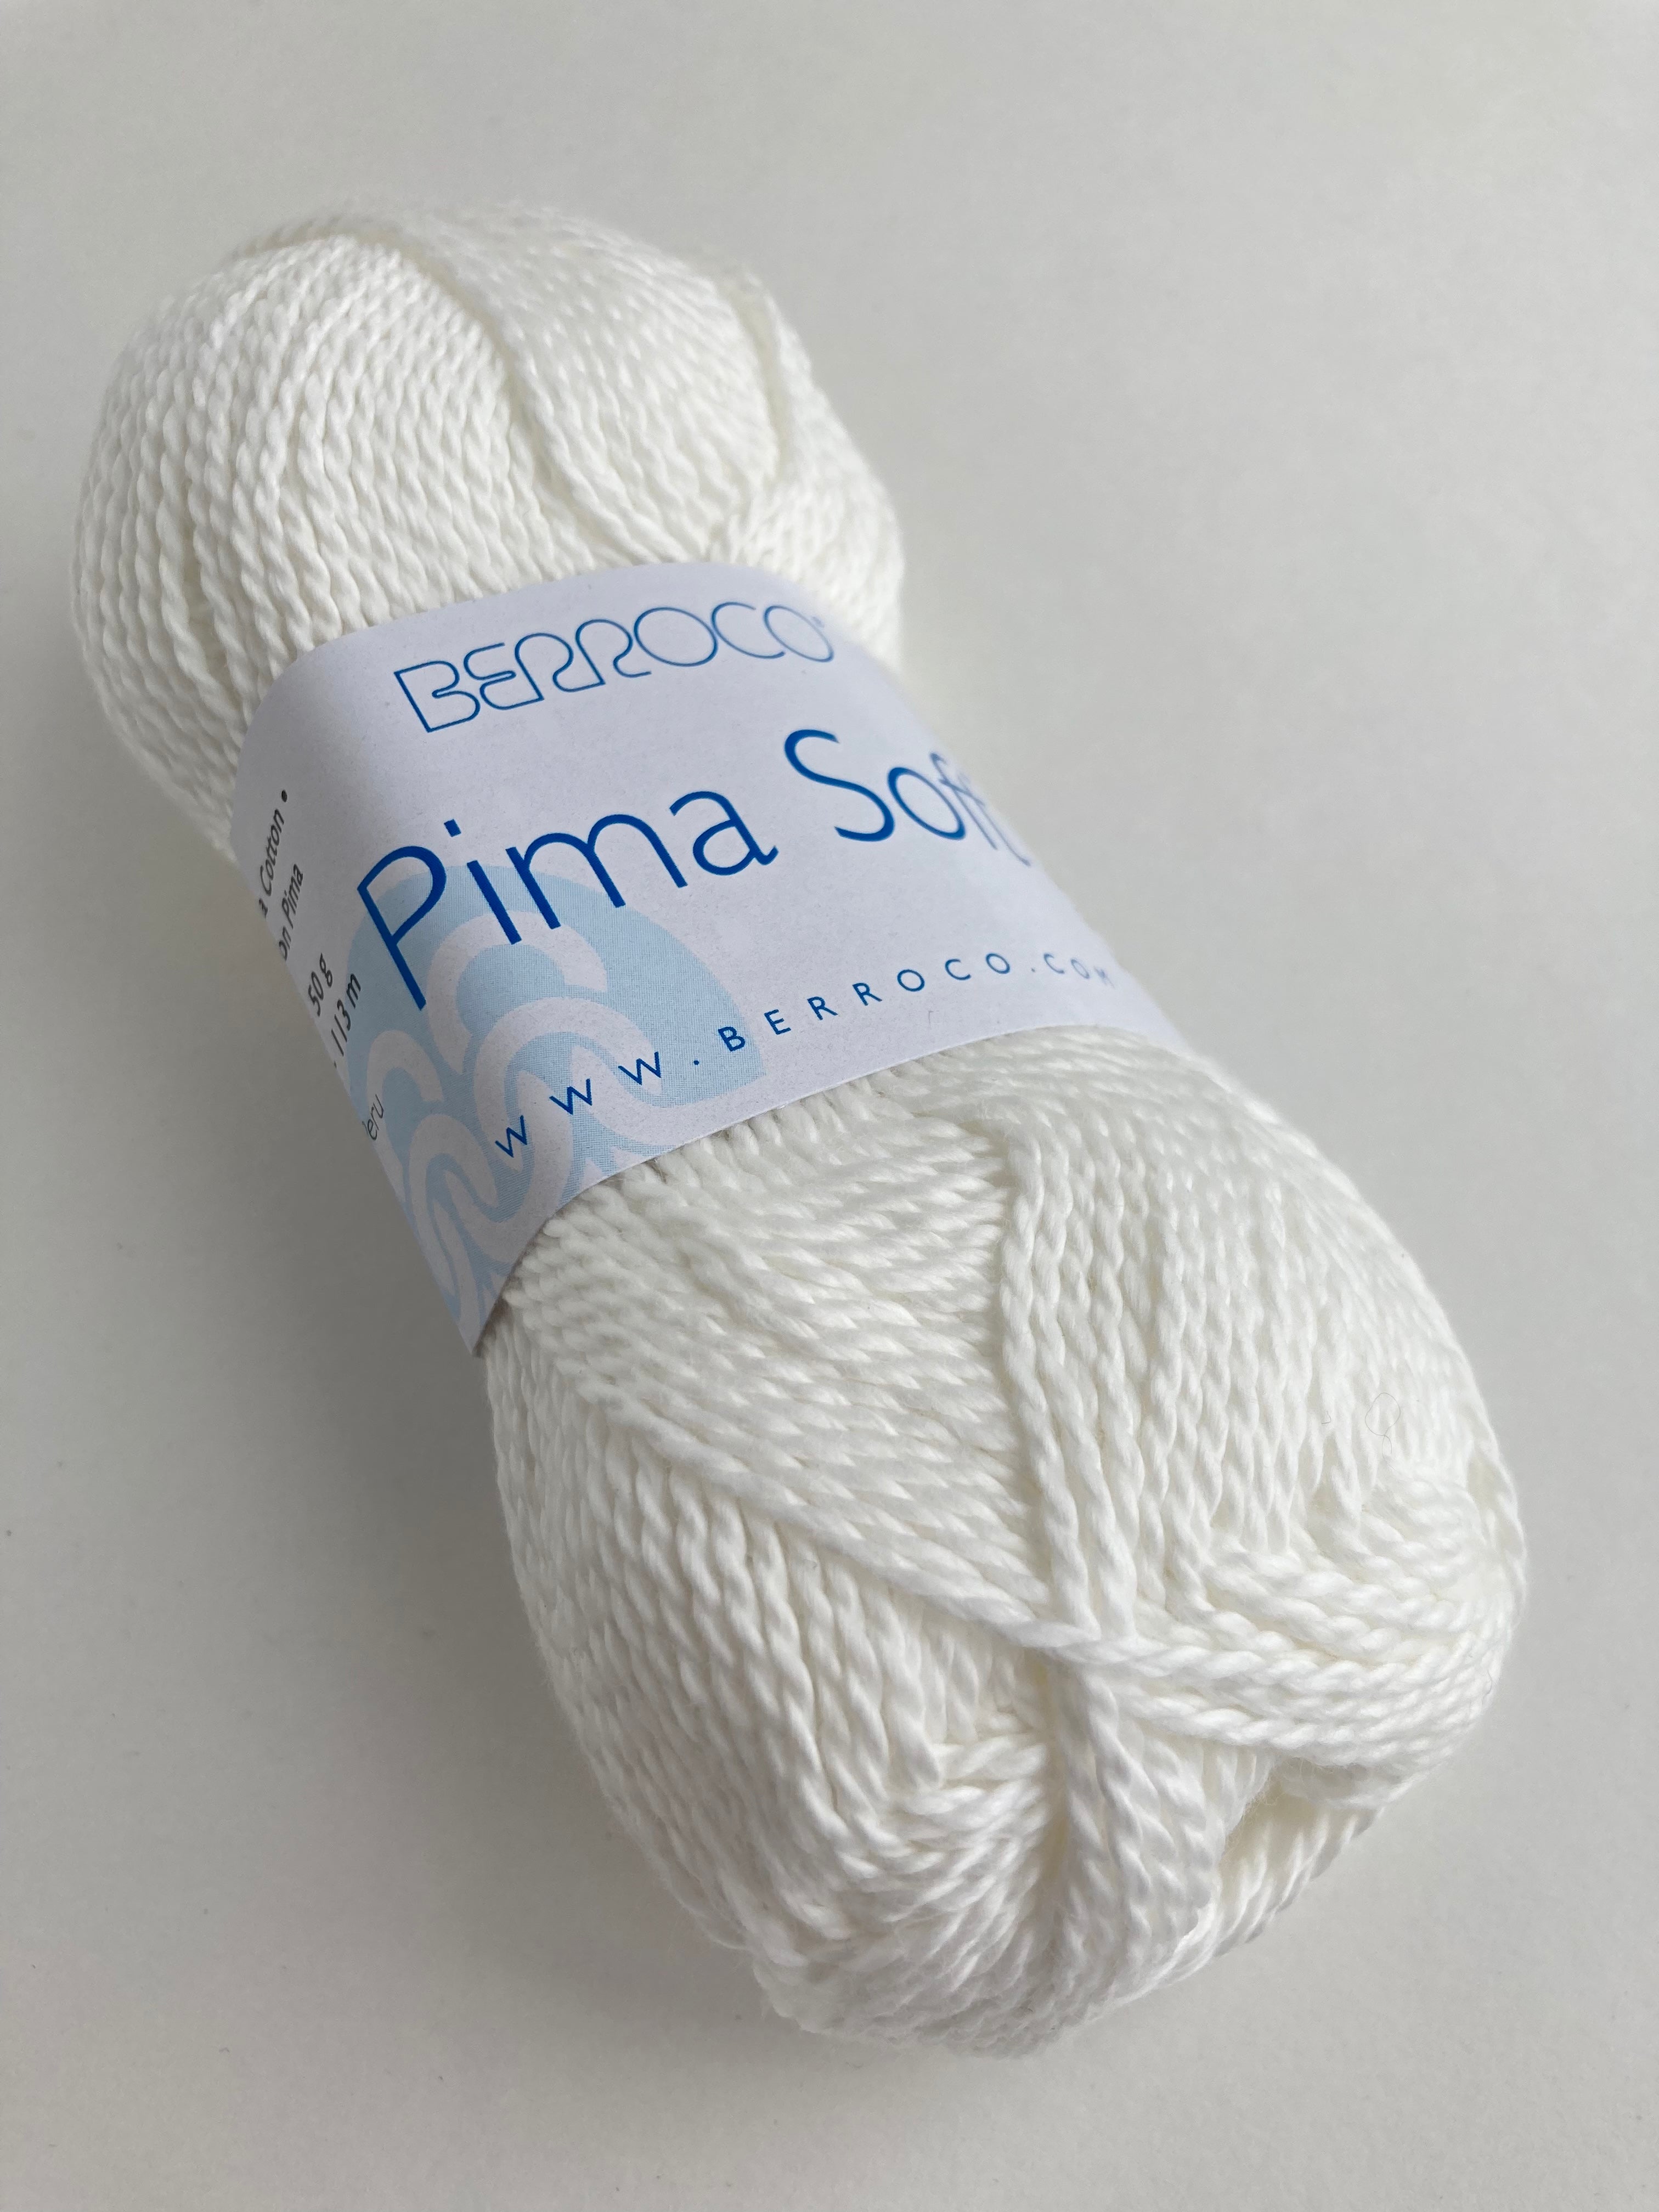 Chiffon 4602 - Pima Soft from Berroco